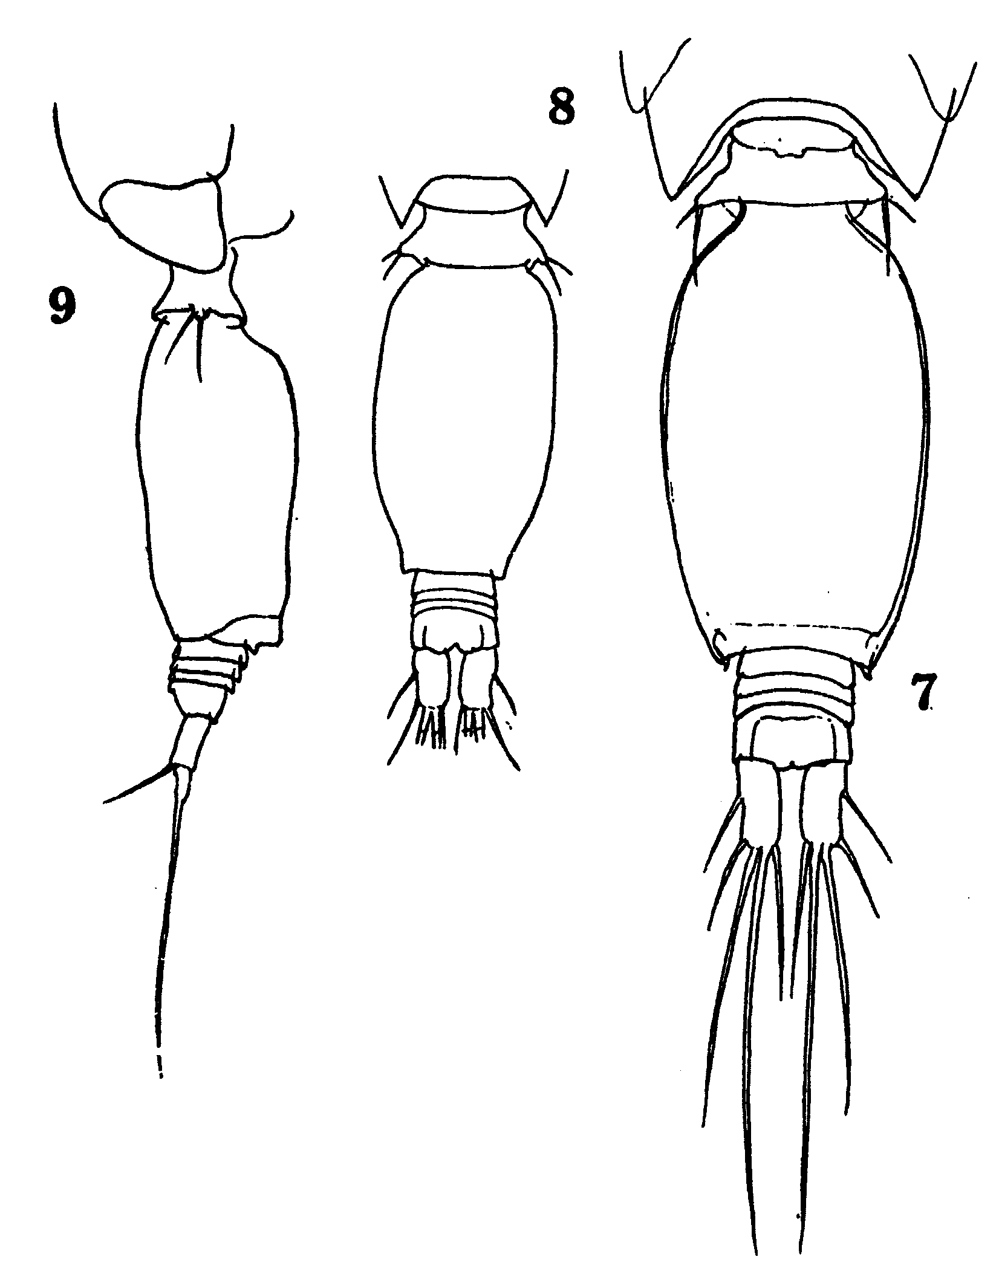 Species Oncaea media - Plate 19 of morphological figures